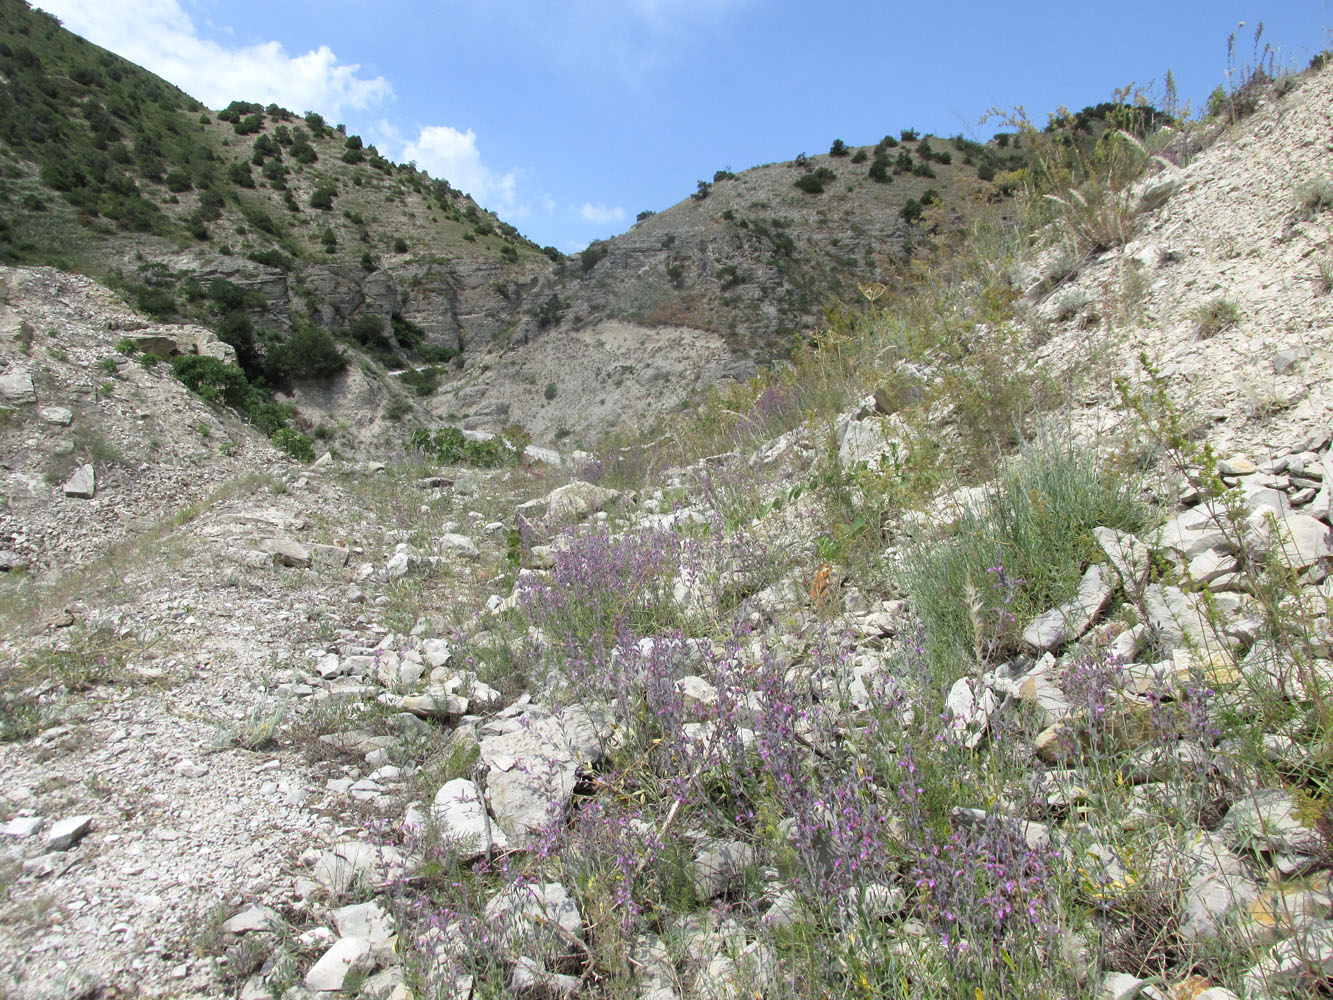 Талги, image of landscape/habitat.